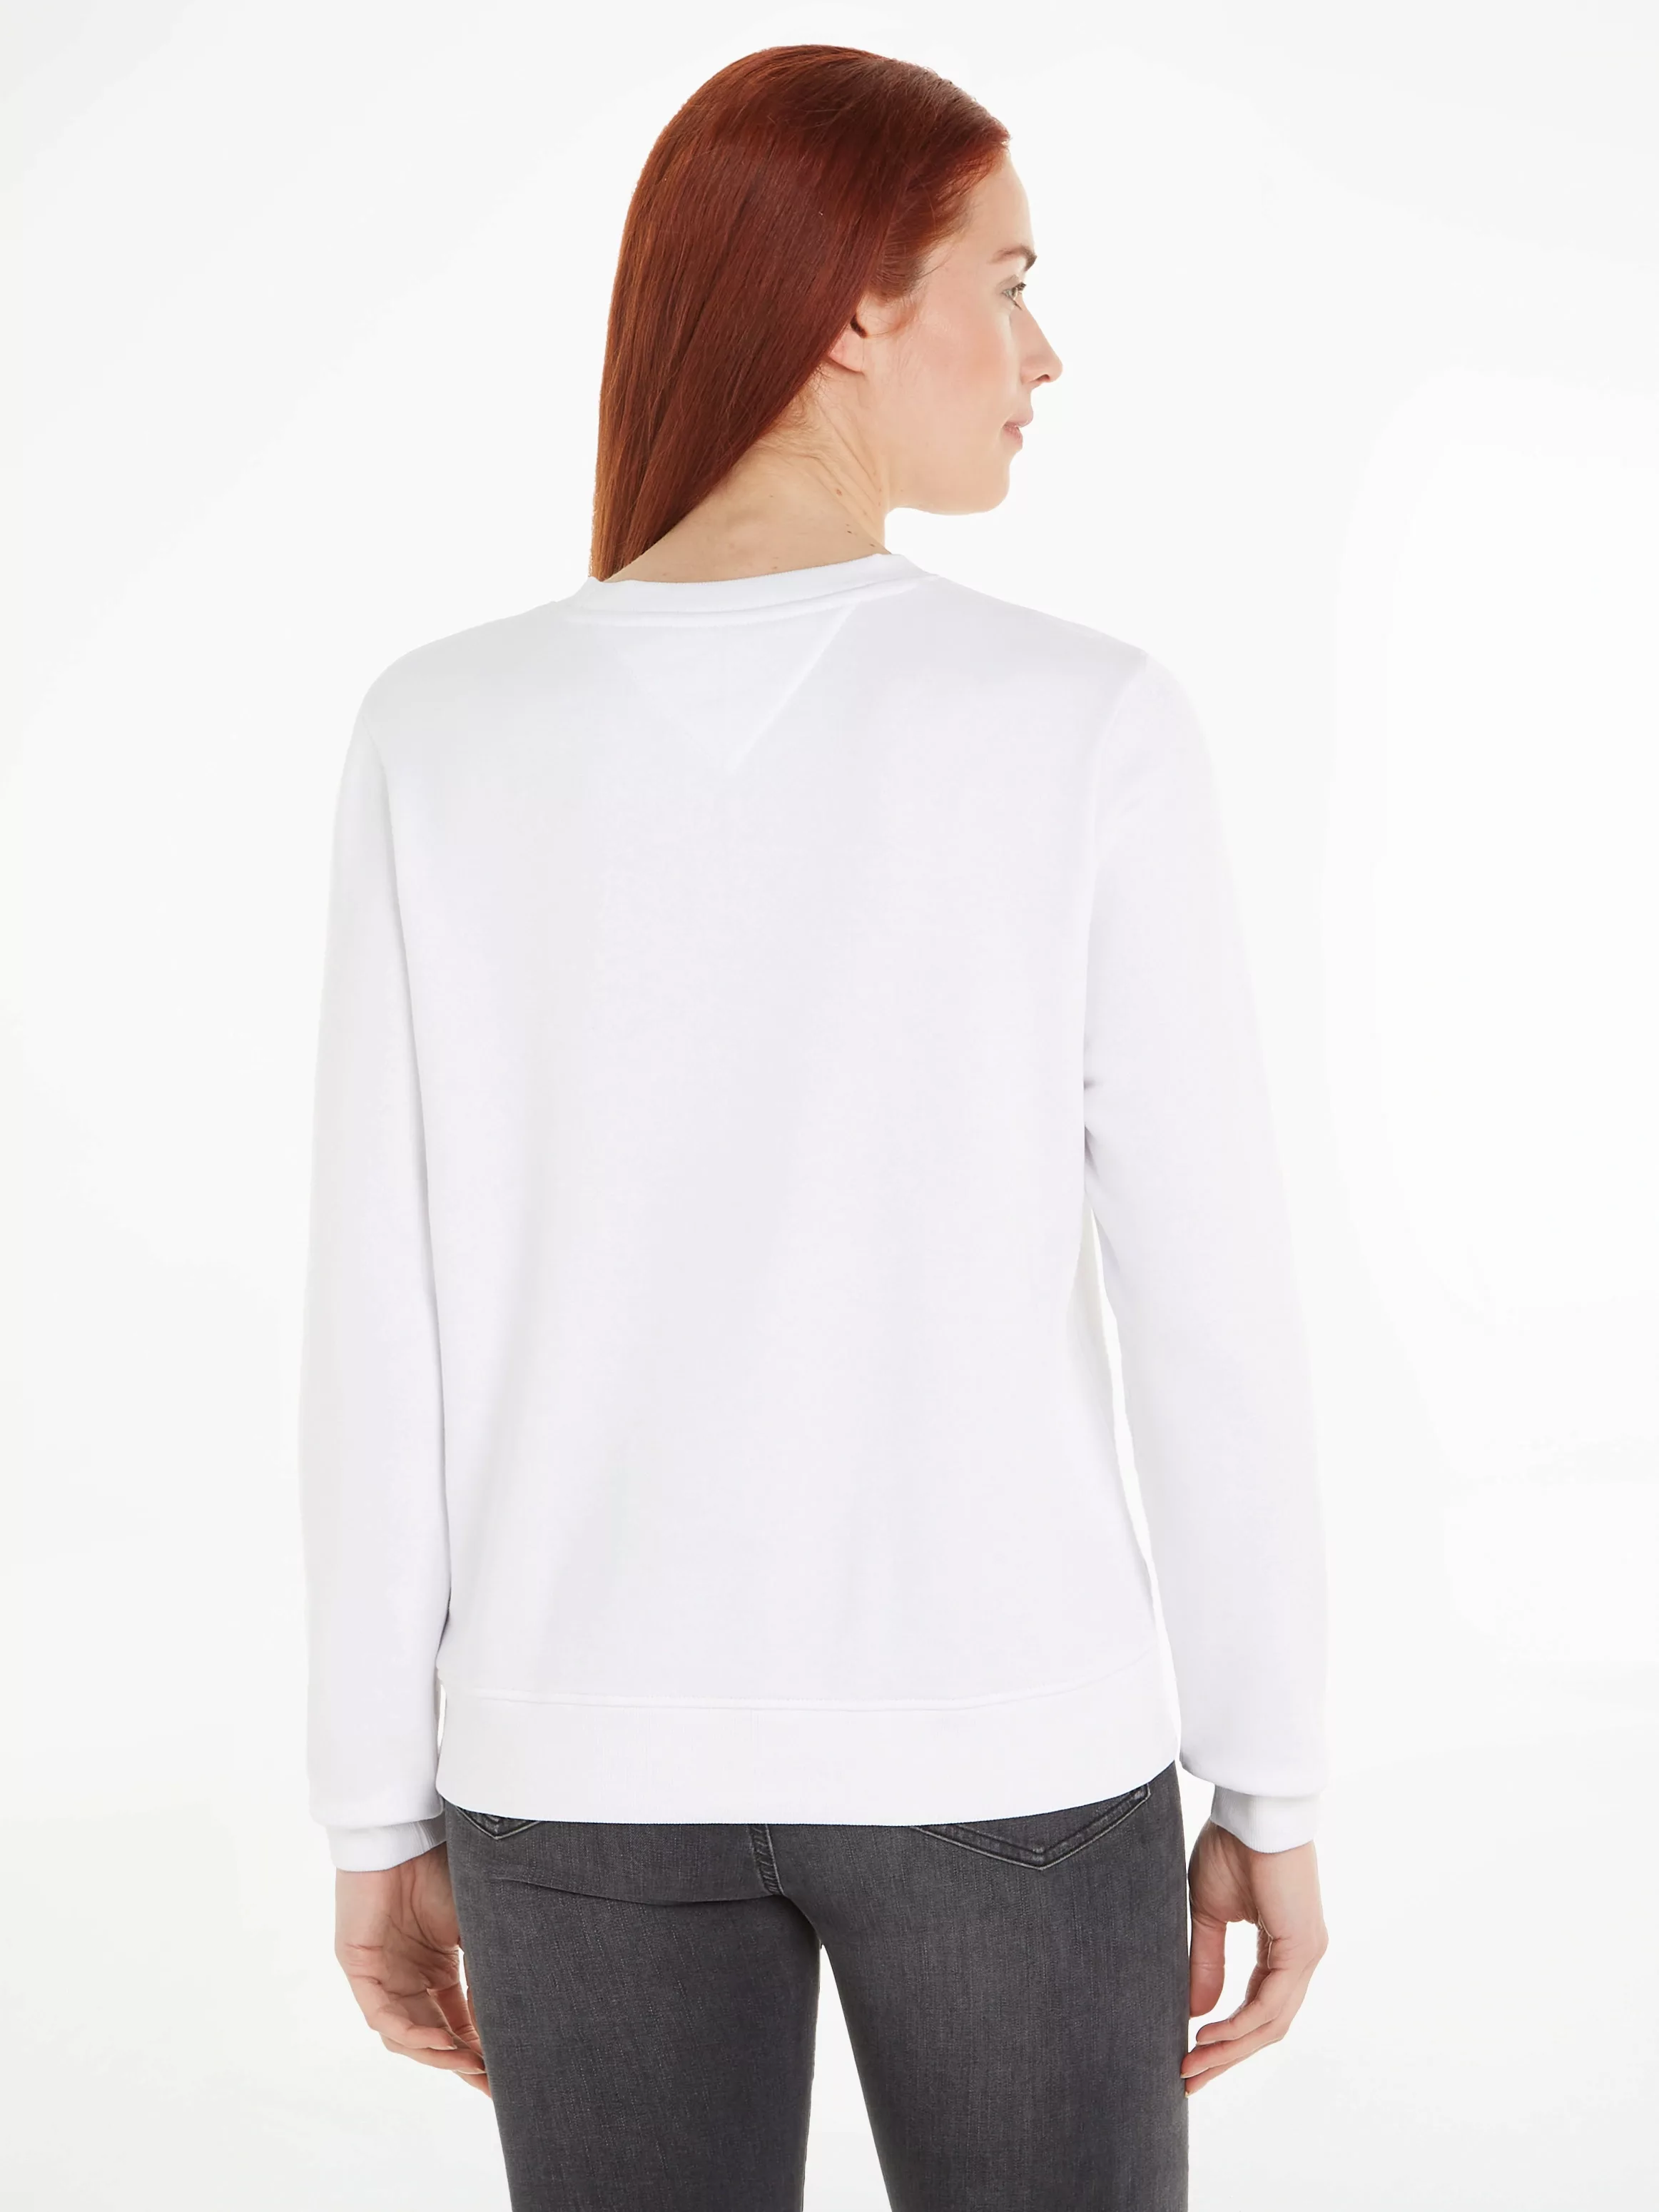 Tommy Jeans Sweatshirt "TJW REG LINEAR CREW EXT" günstig online kaufen